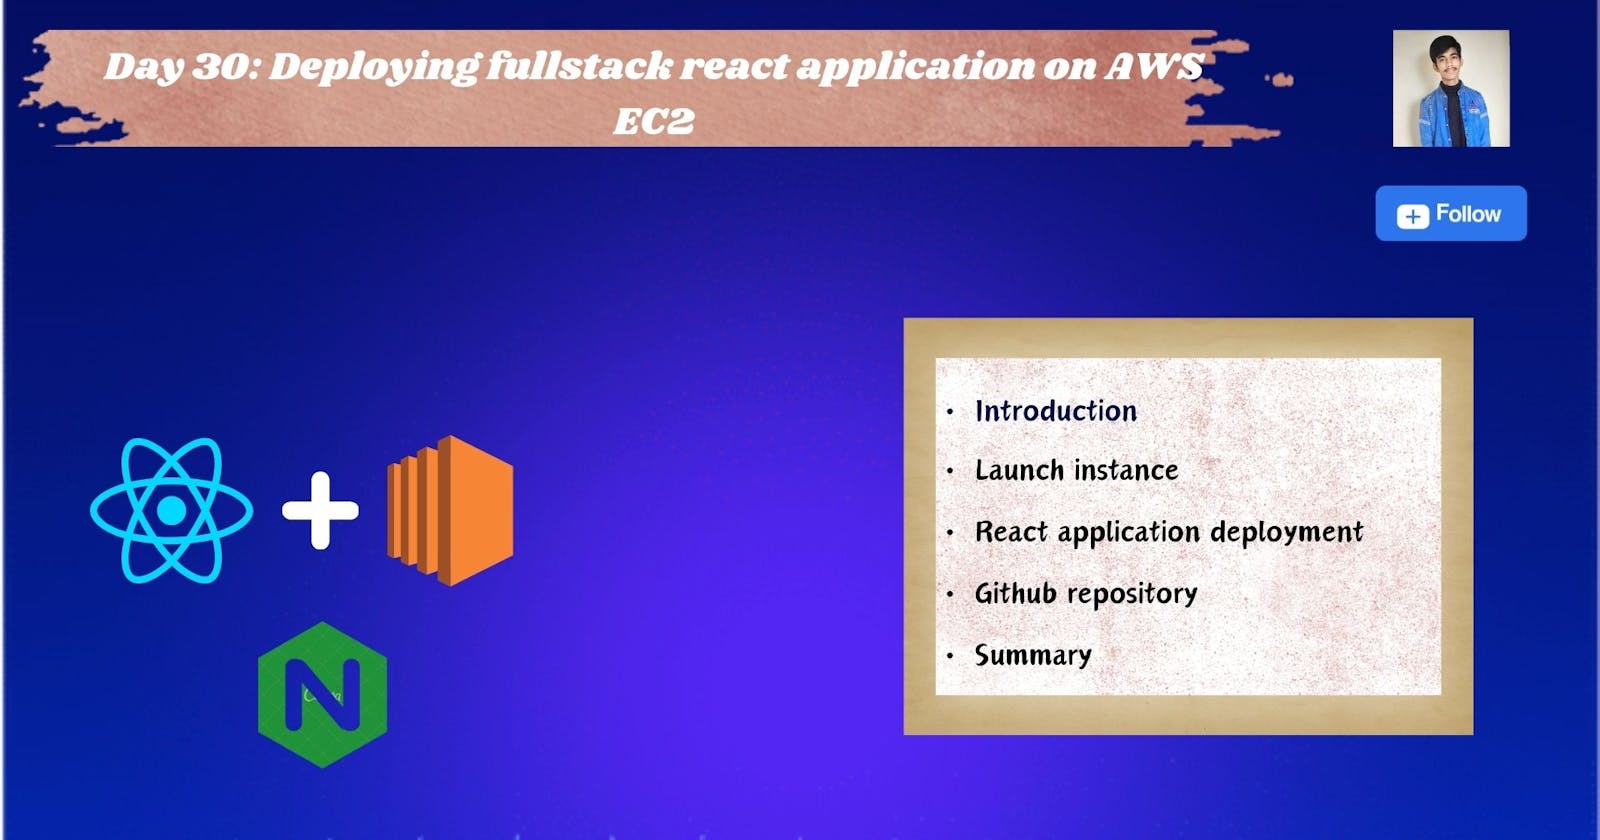 Day 30: Deploying Fullstack react application on AWS EC2